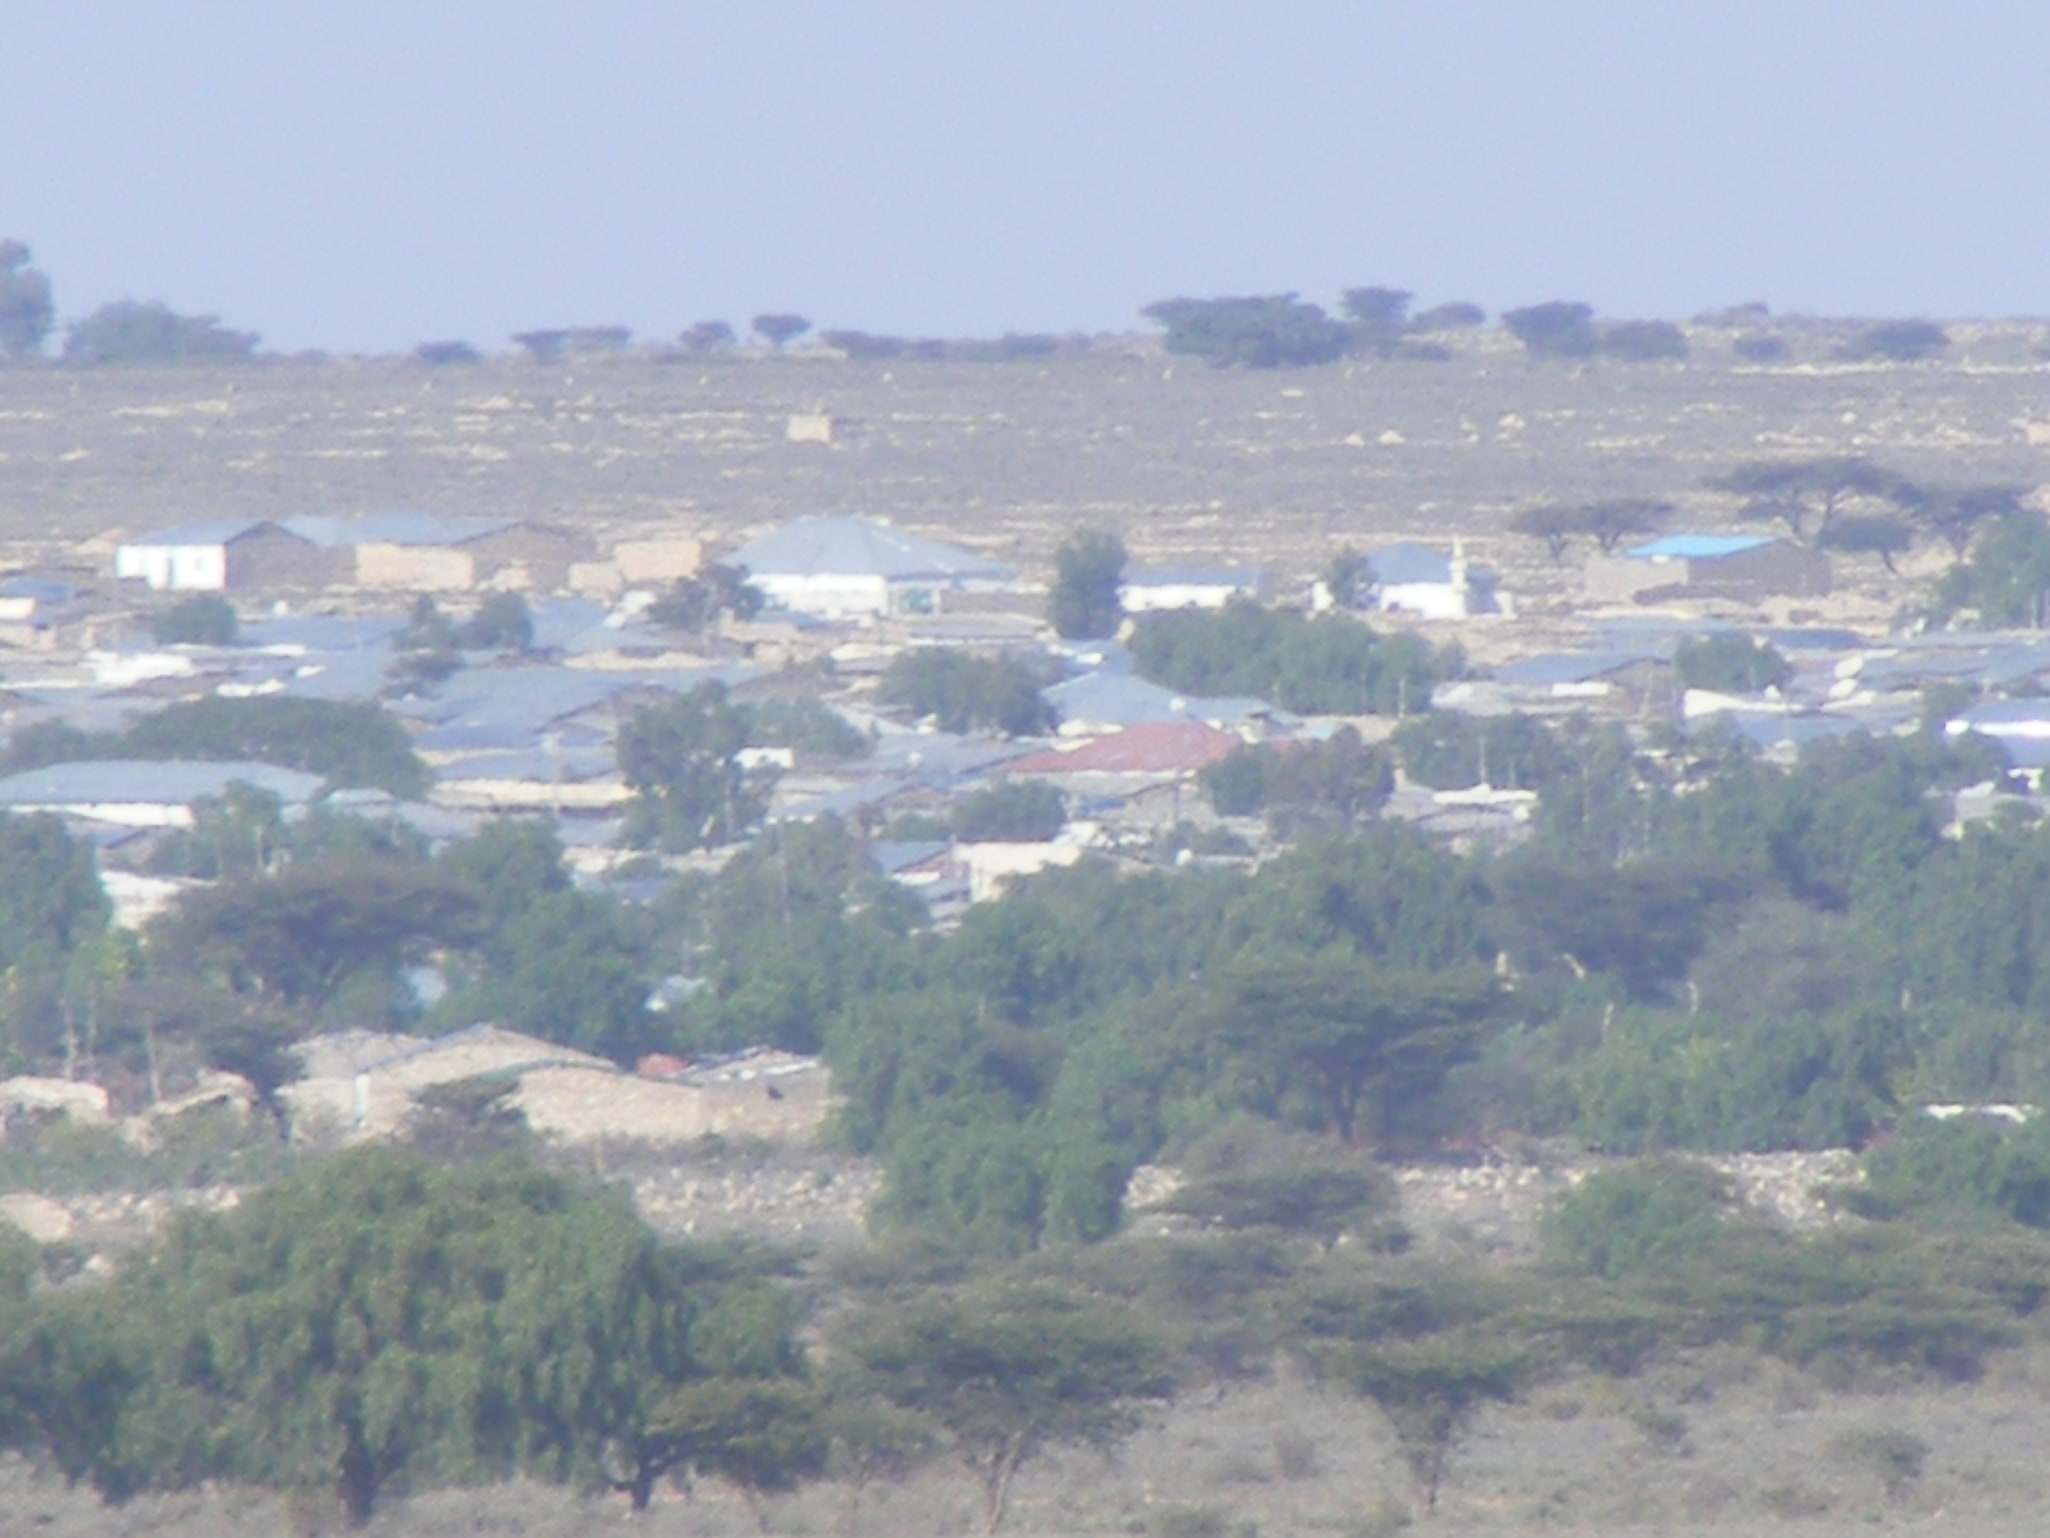 Erigabo, Somalia